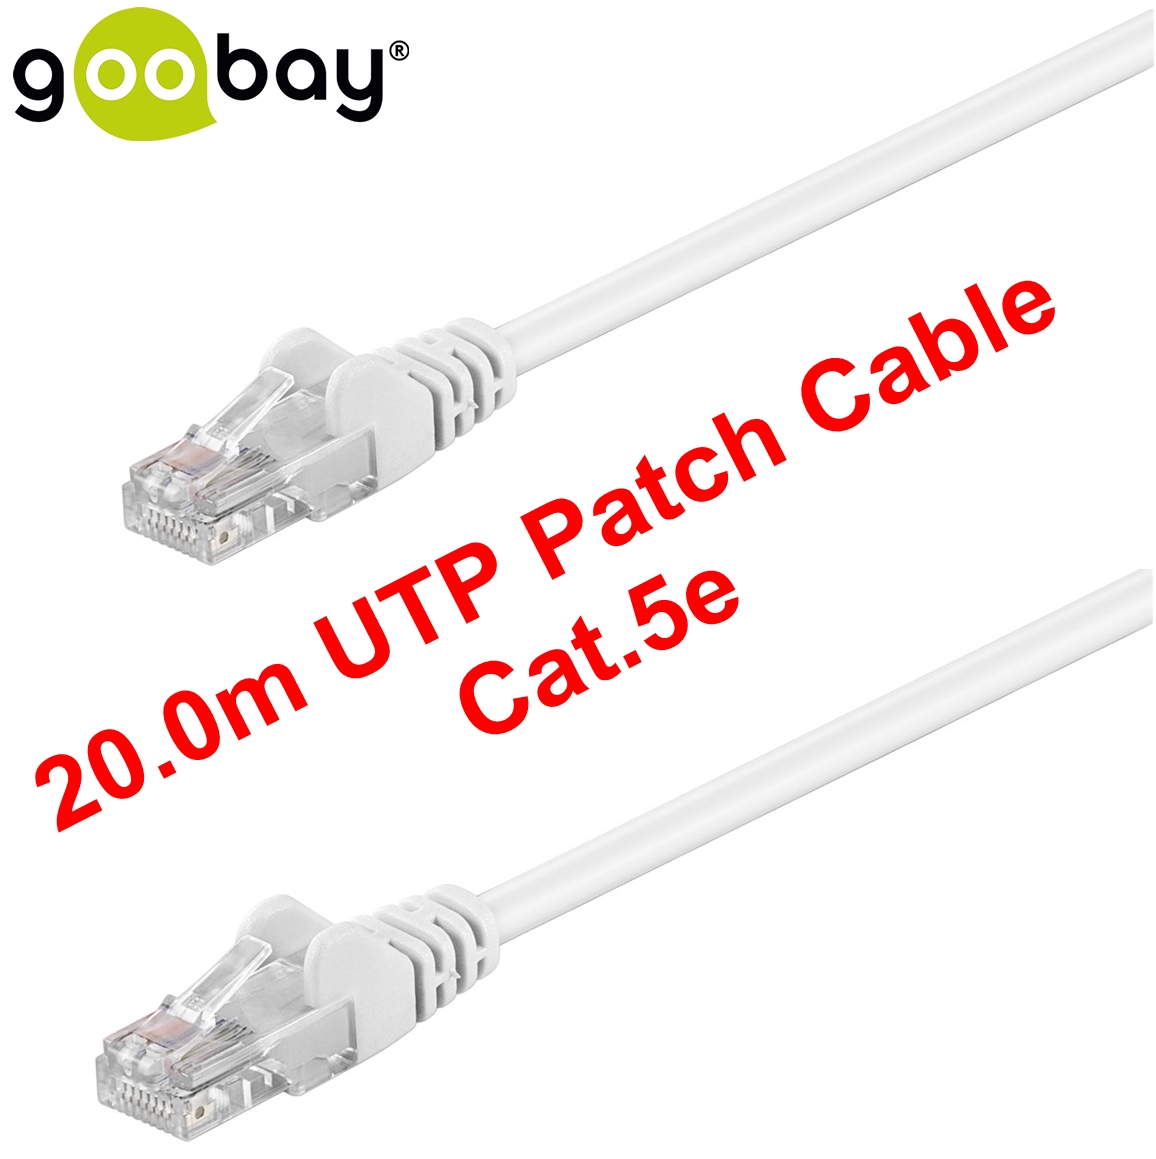 20.00m UTP Patch Cable Cat.5e GOOBAY (white)